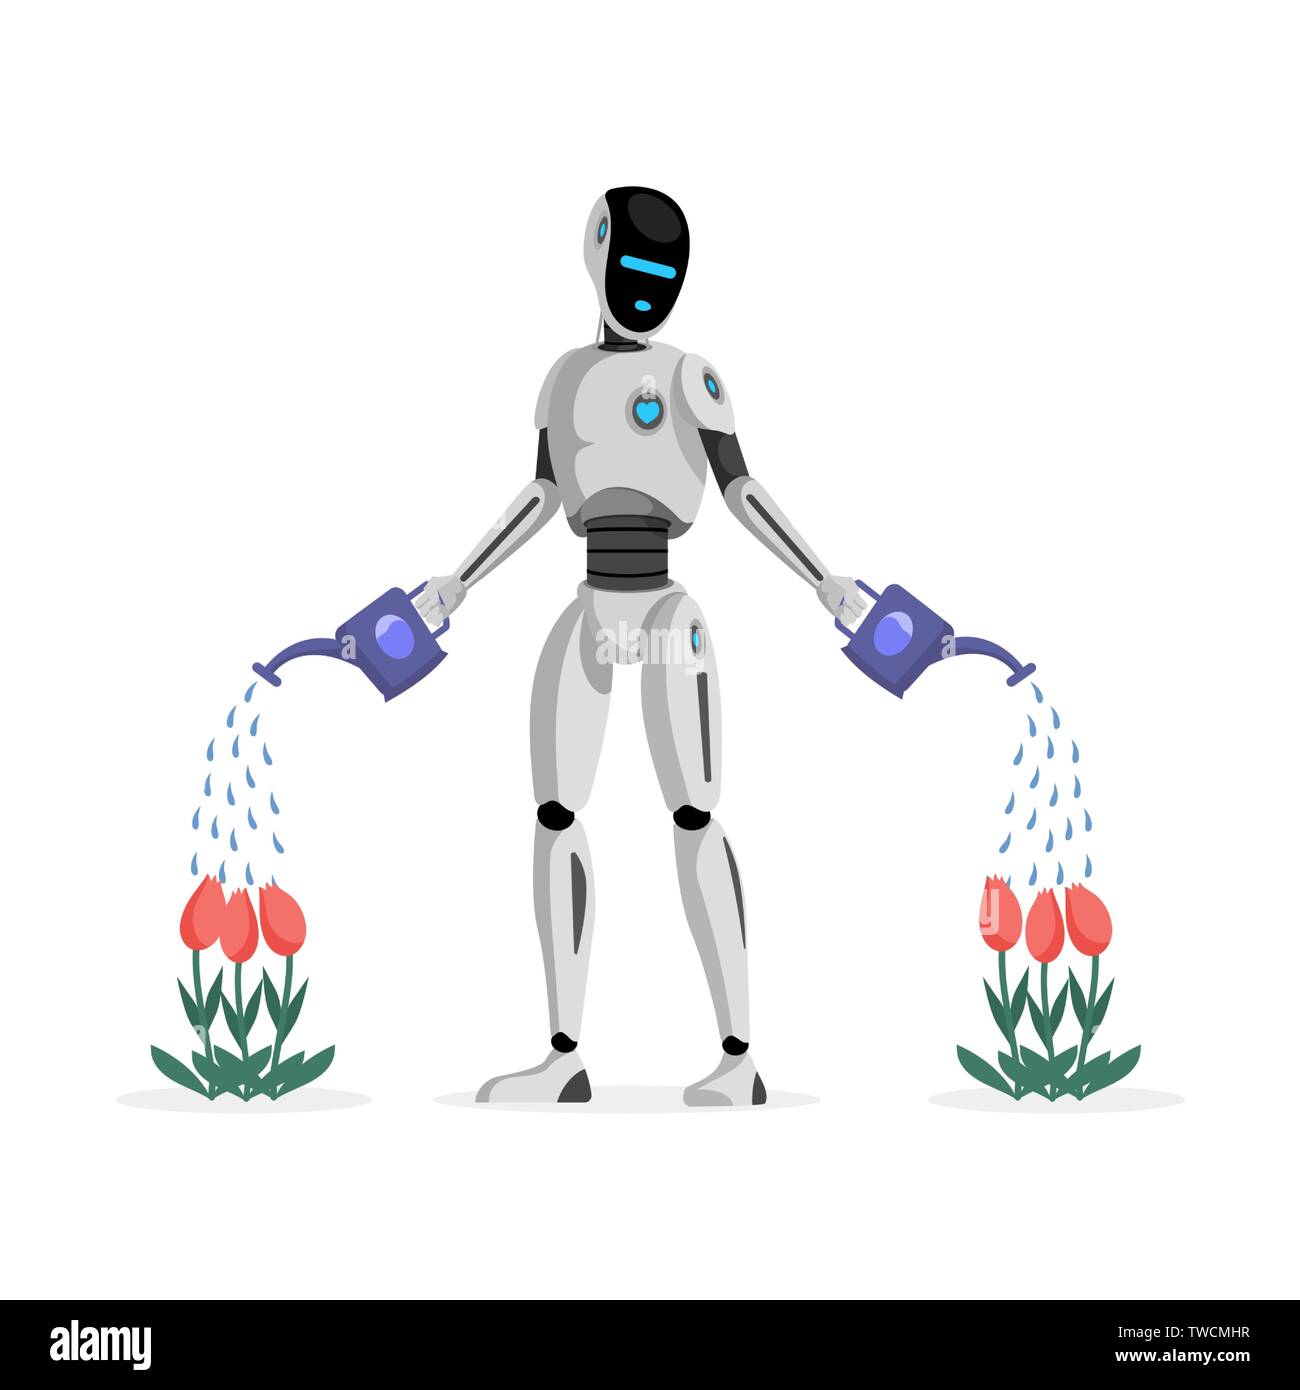 Robot watering flowers flat vector illustration. Mechanical gardener, futuristic garden assistant cartoon character. Artificial intelligence cultivating plants, horticulture assistance technology Stock Vector